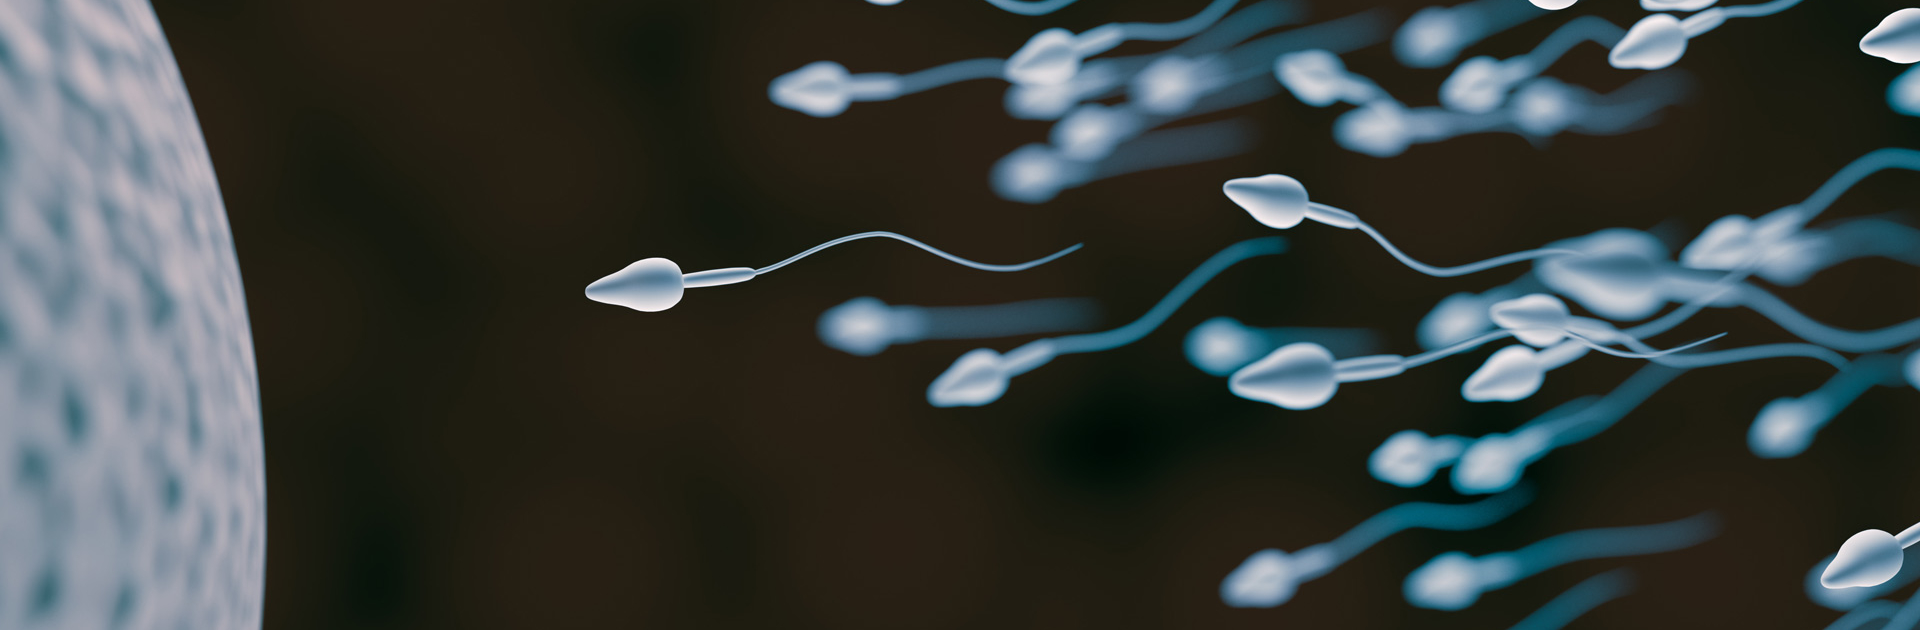 сперма в не организма фото 64